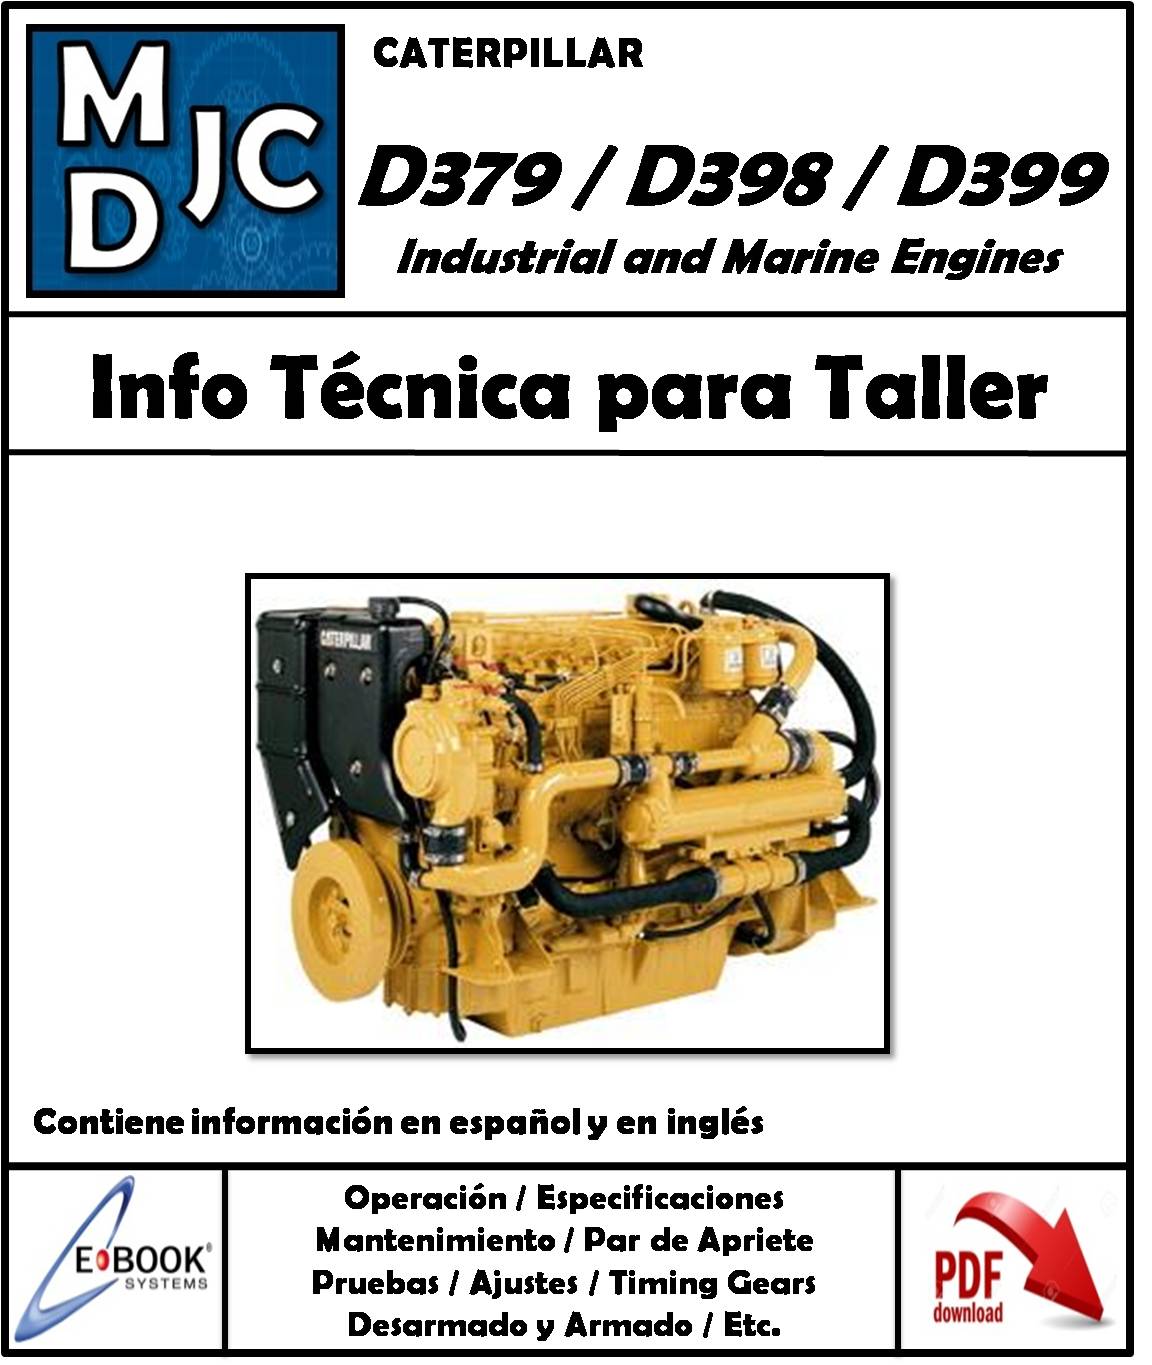 Manual De Información Técnica Para Taller Motor Caterpillar D379 / D398 /  D399 | MDJC - MANUALES DE TALLER